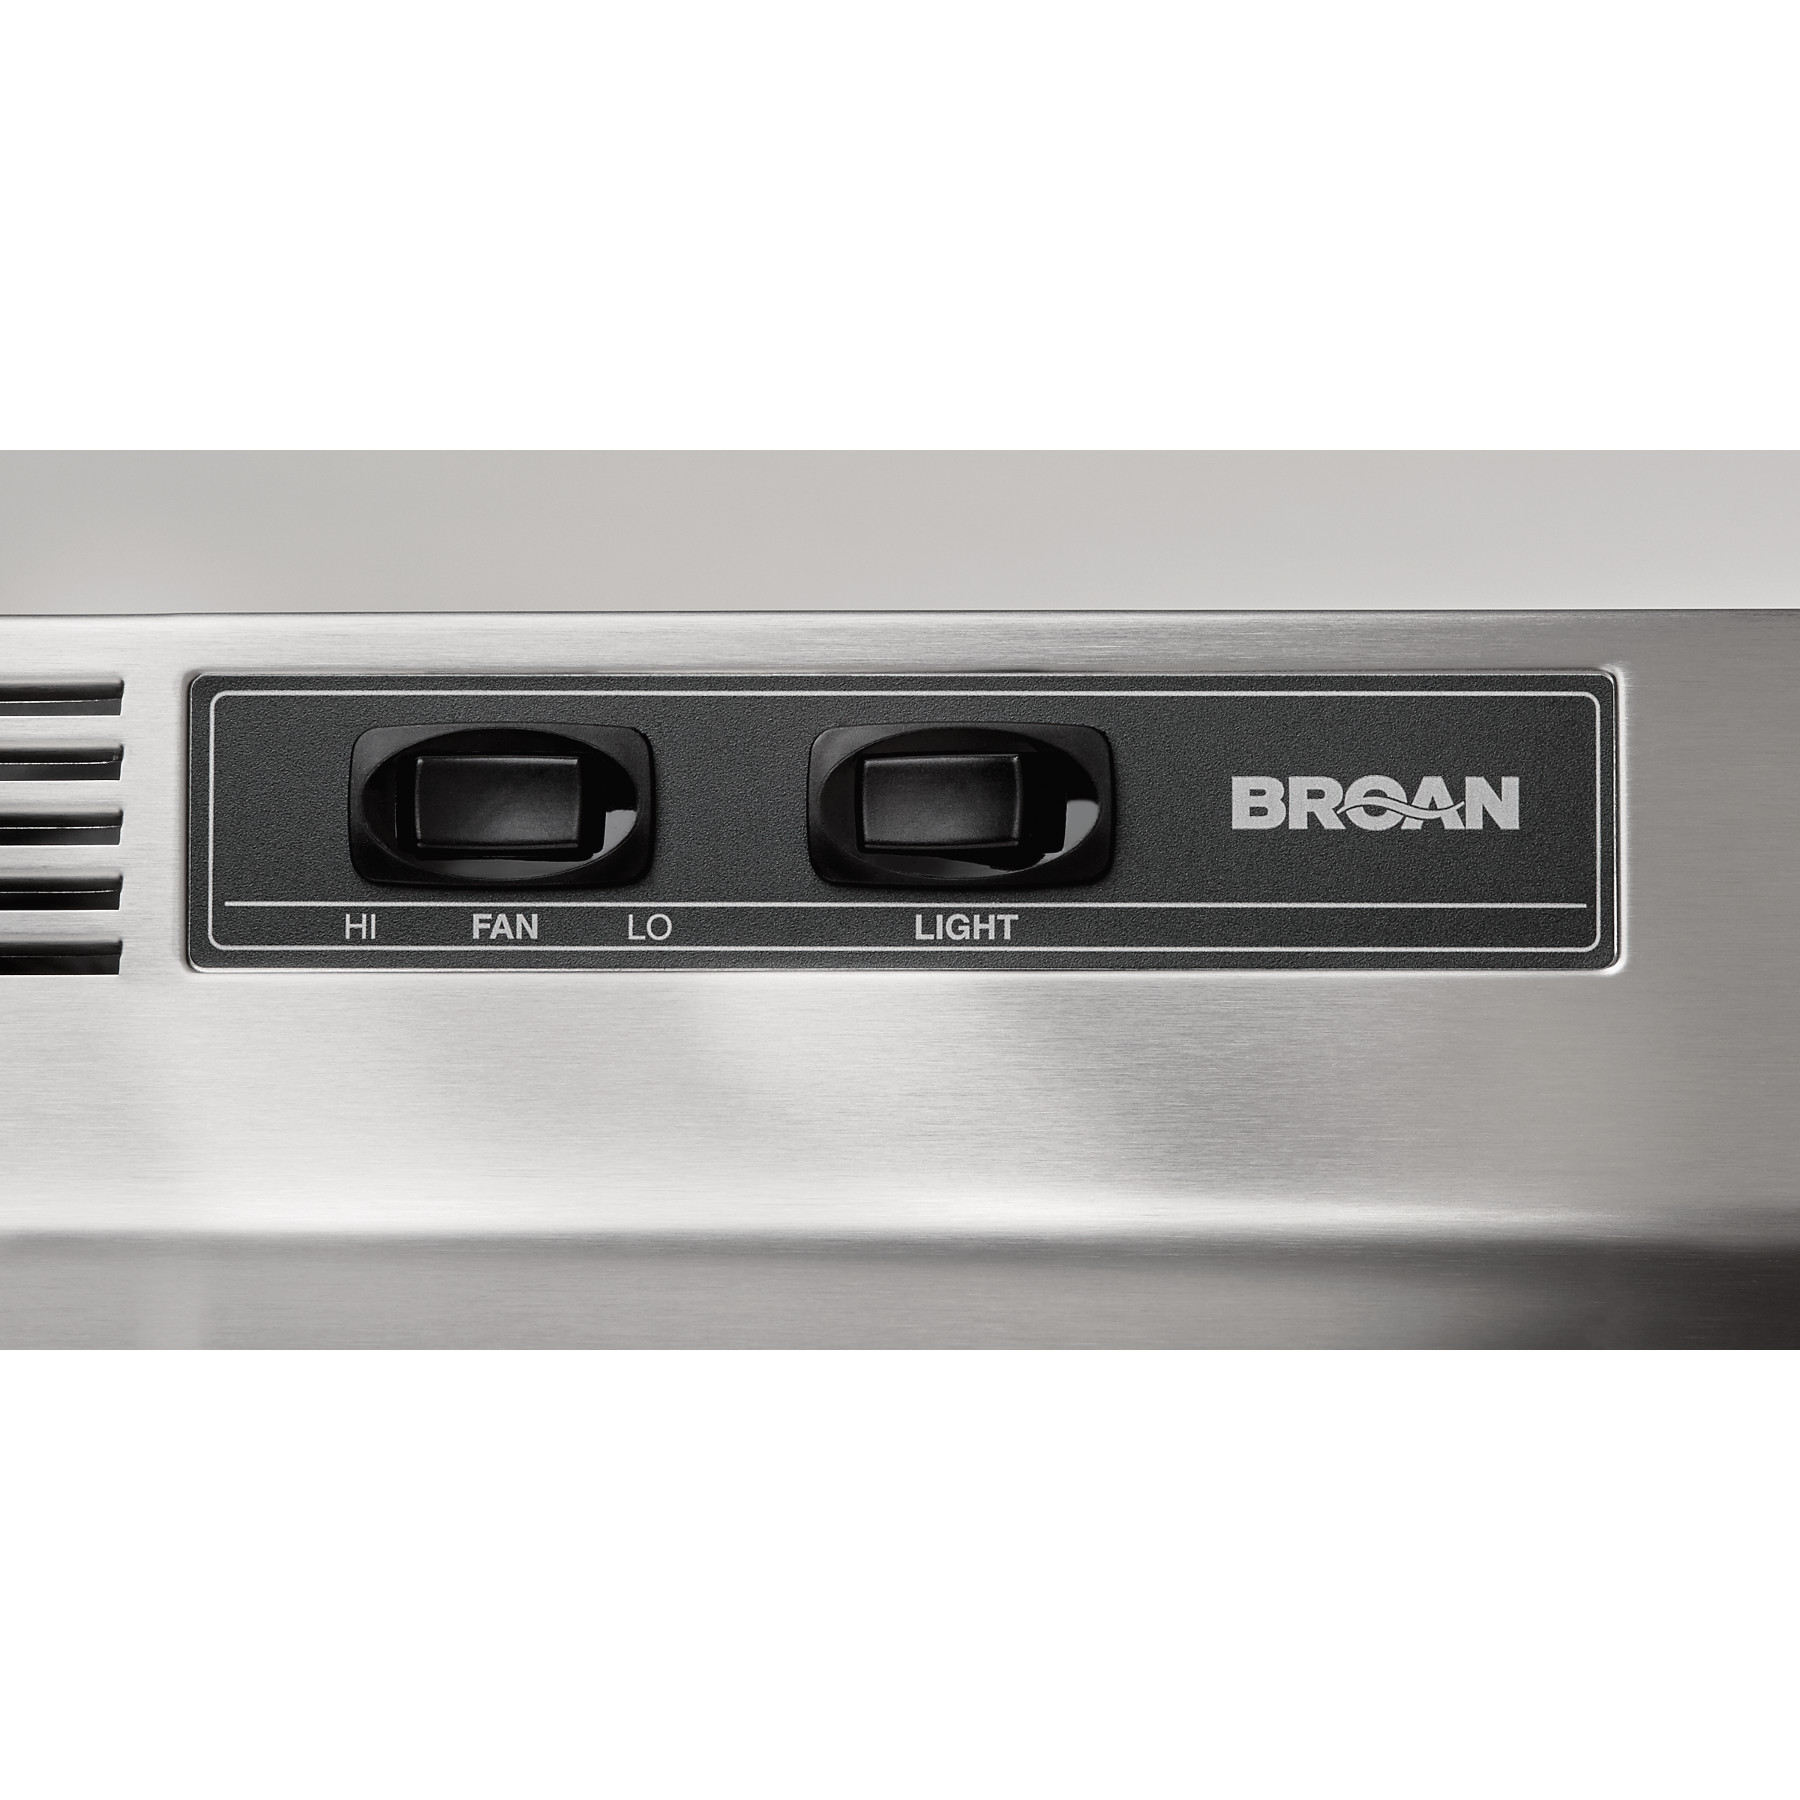 413623 by Broan - Broan® 36-Inch Ductless Under-Cabinet Range Hood